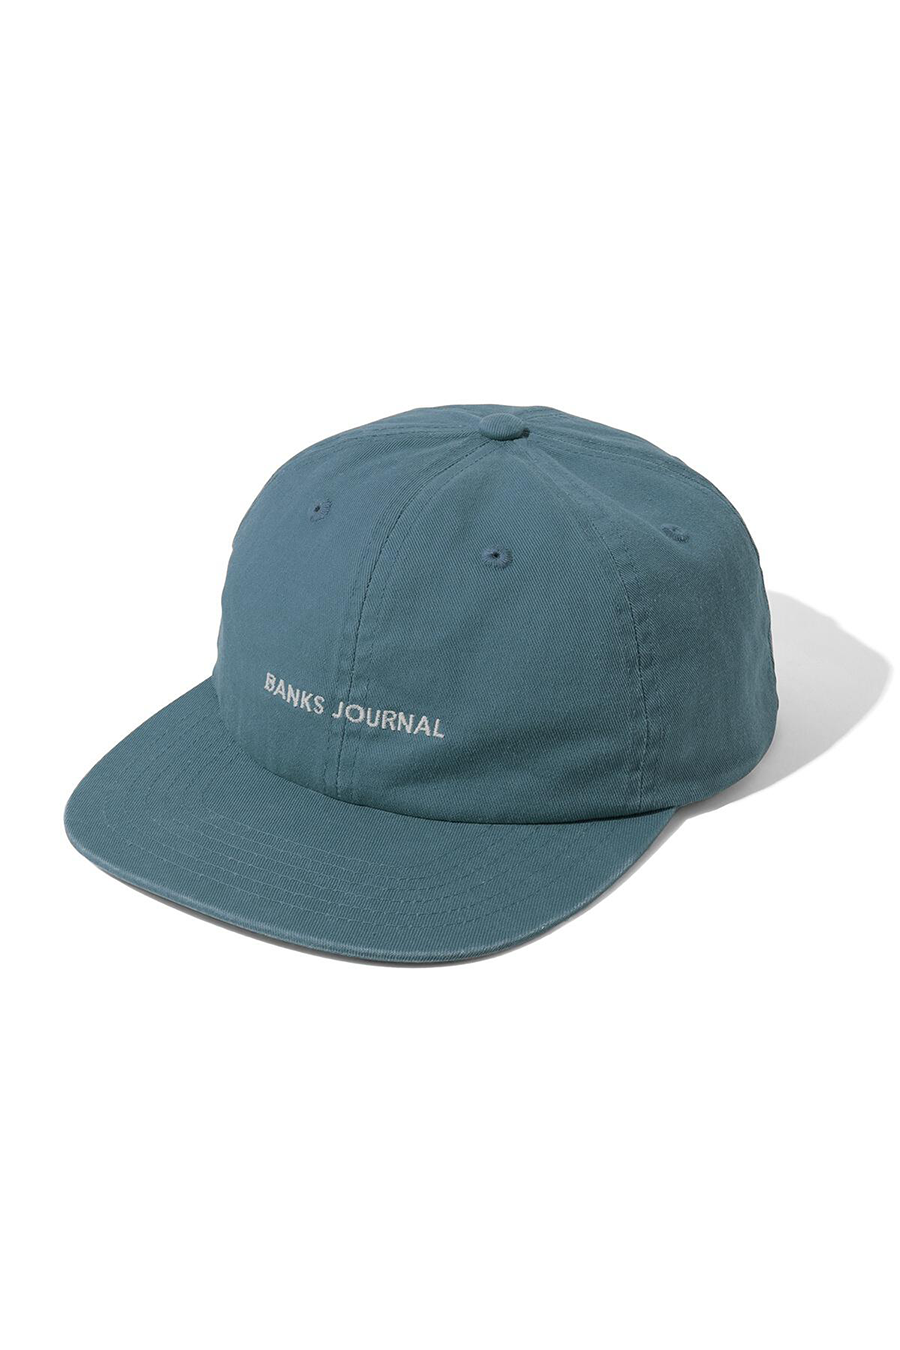 Label Hat | Atlantic - Main Image Number 1 of 2